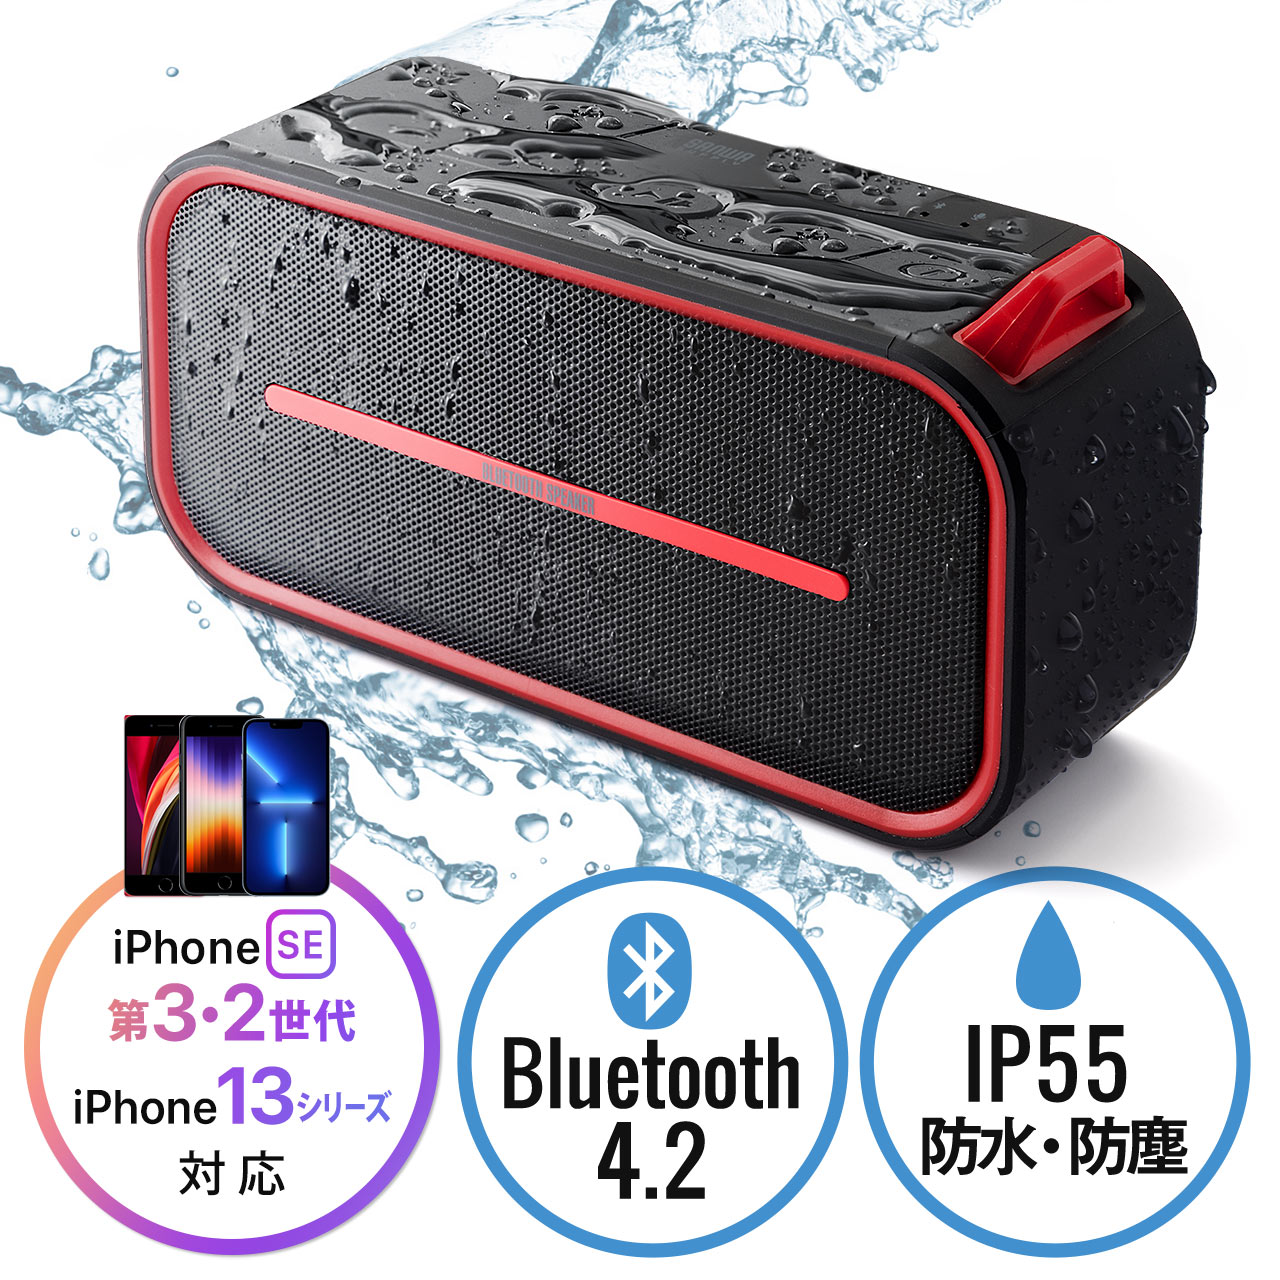 BluetoothXs[J[ hho Bluetooth 4.2 microSD MP3Đ 6Wo bh 400-SP069R